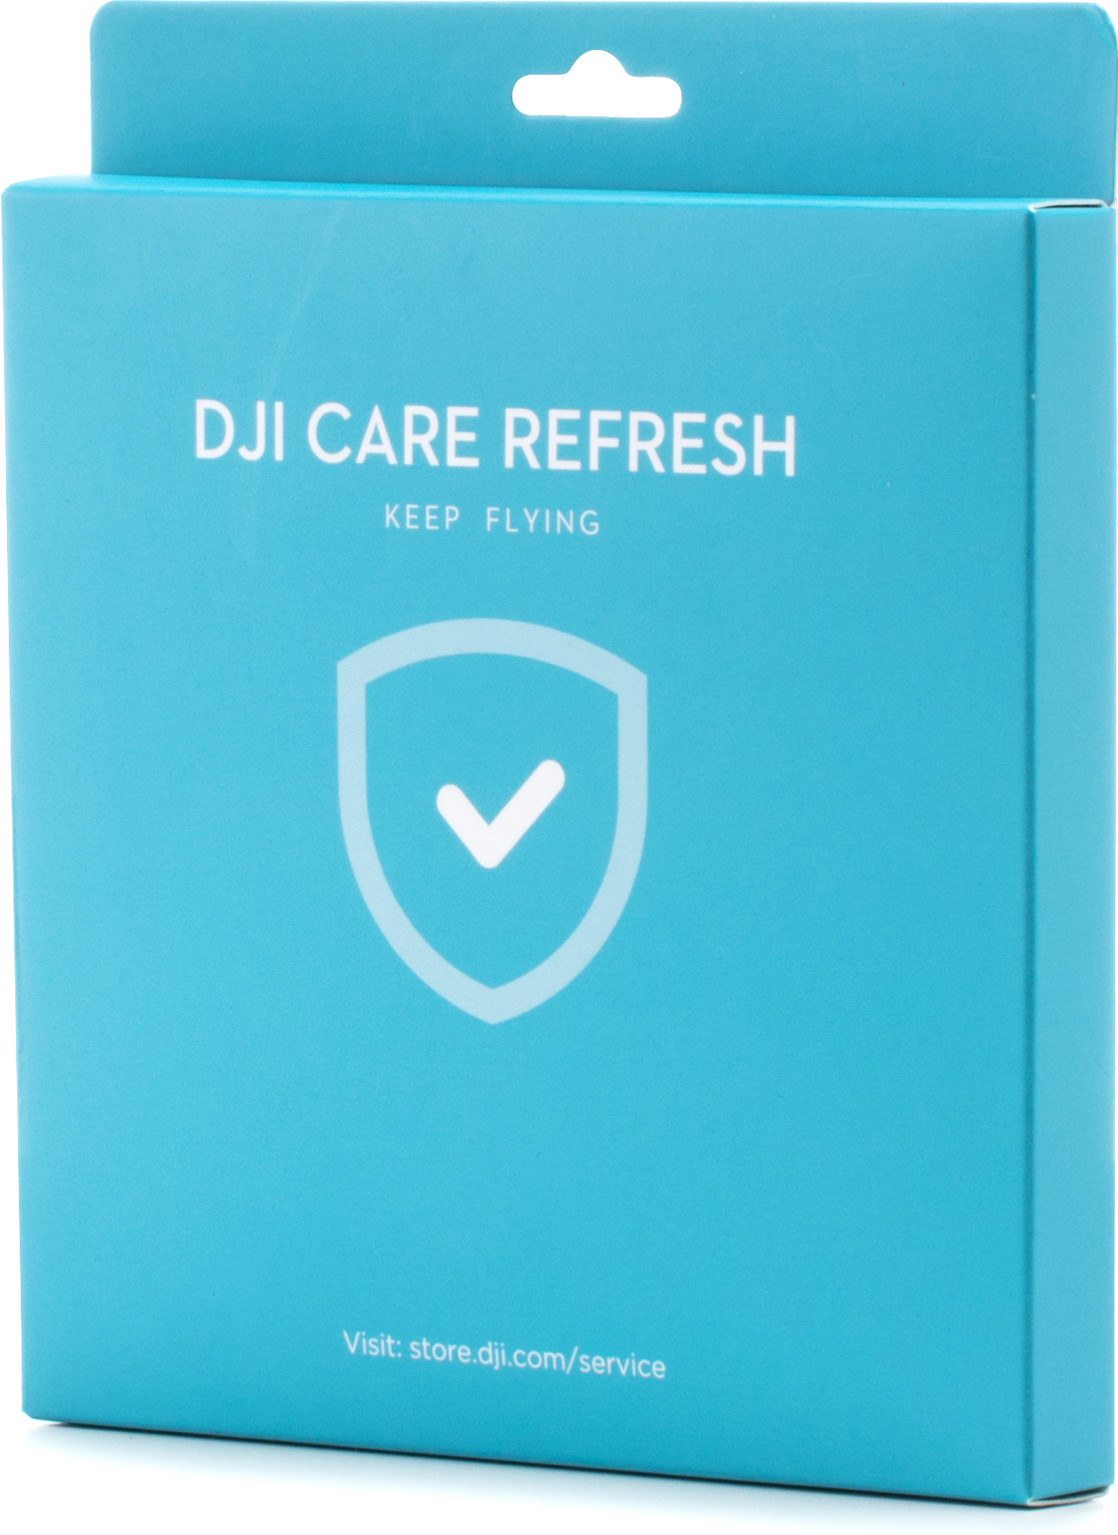 DJI Care Refresh Card Mavic Air